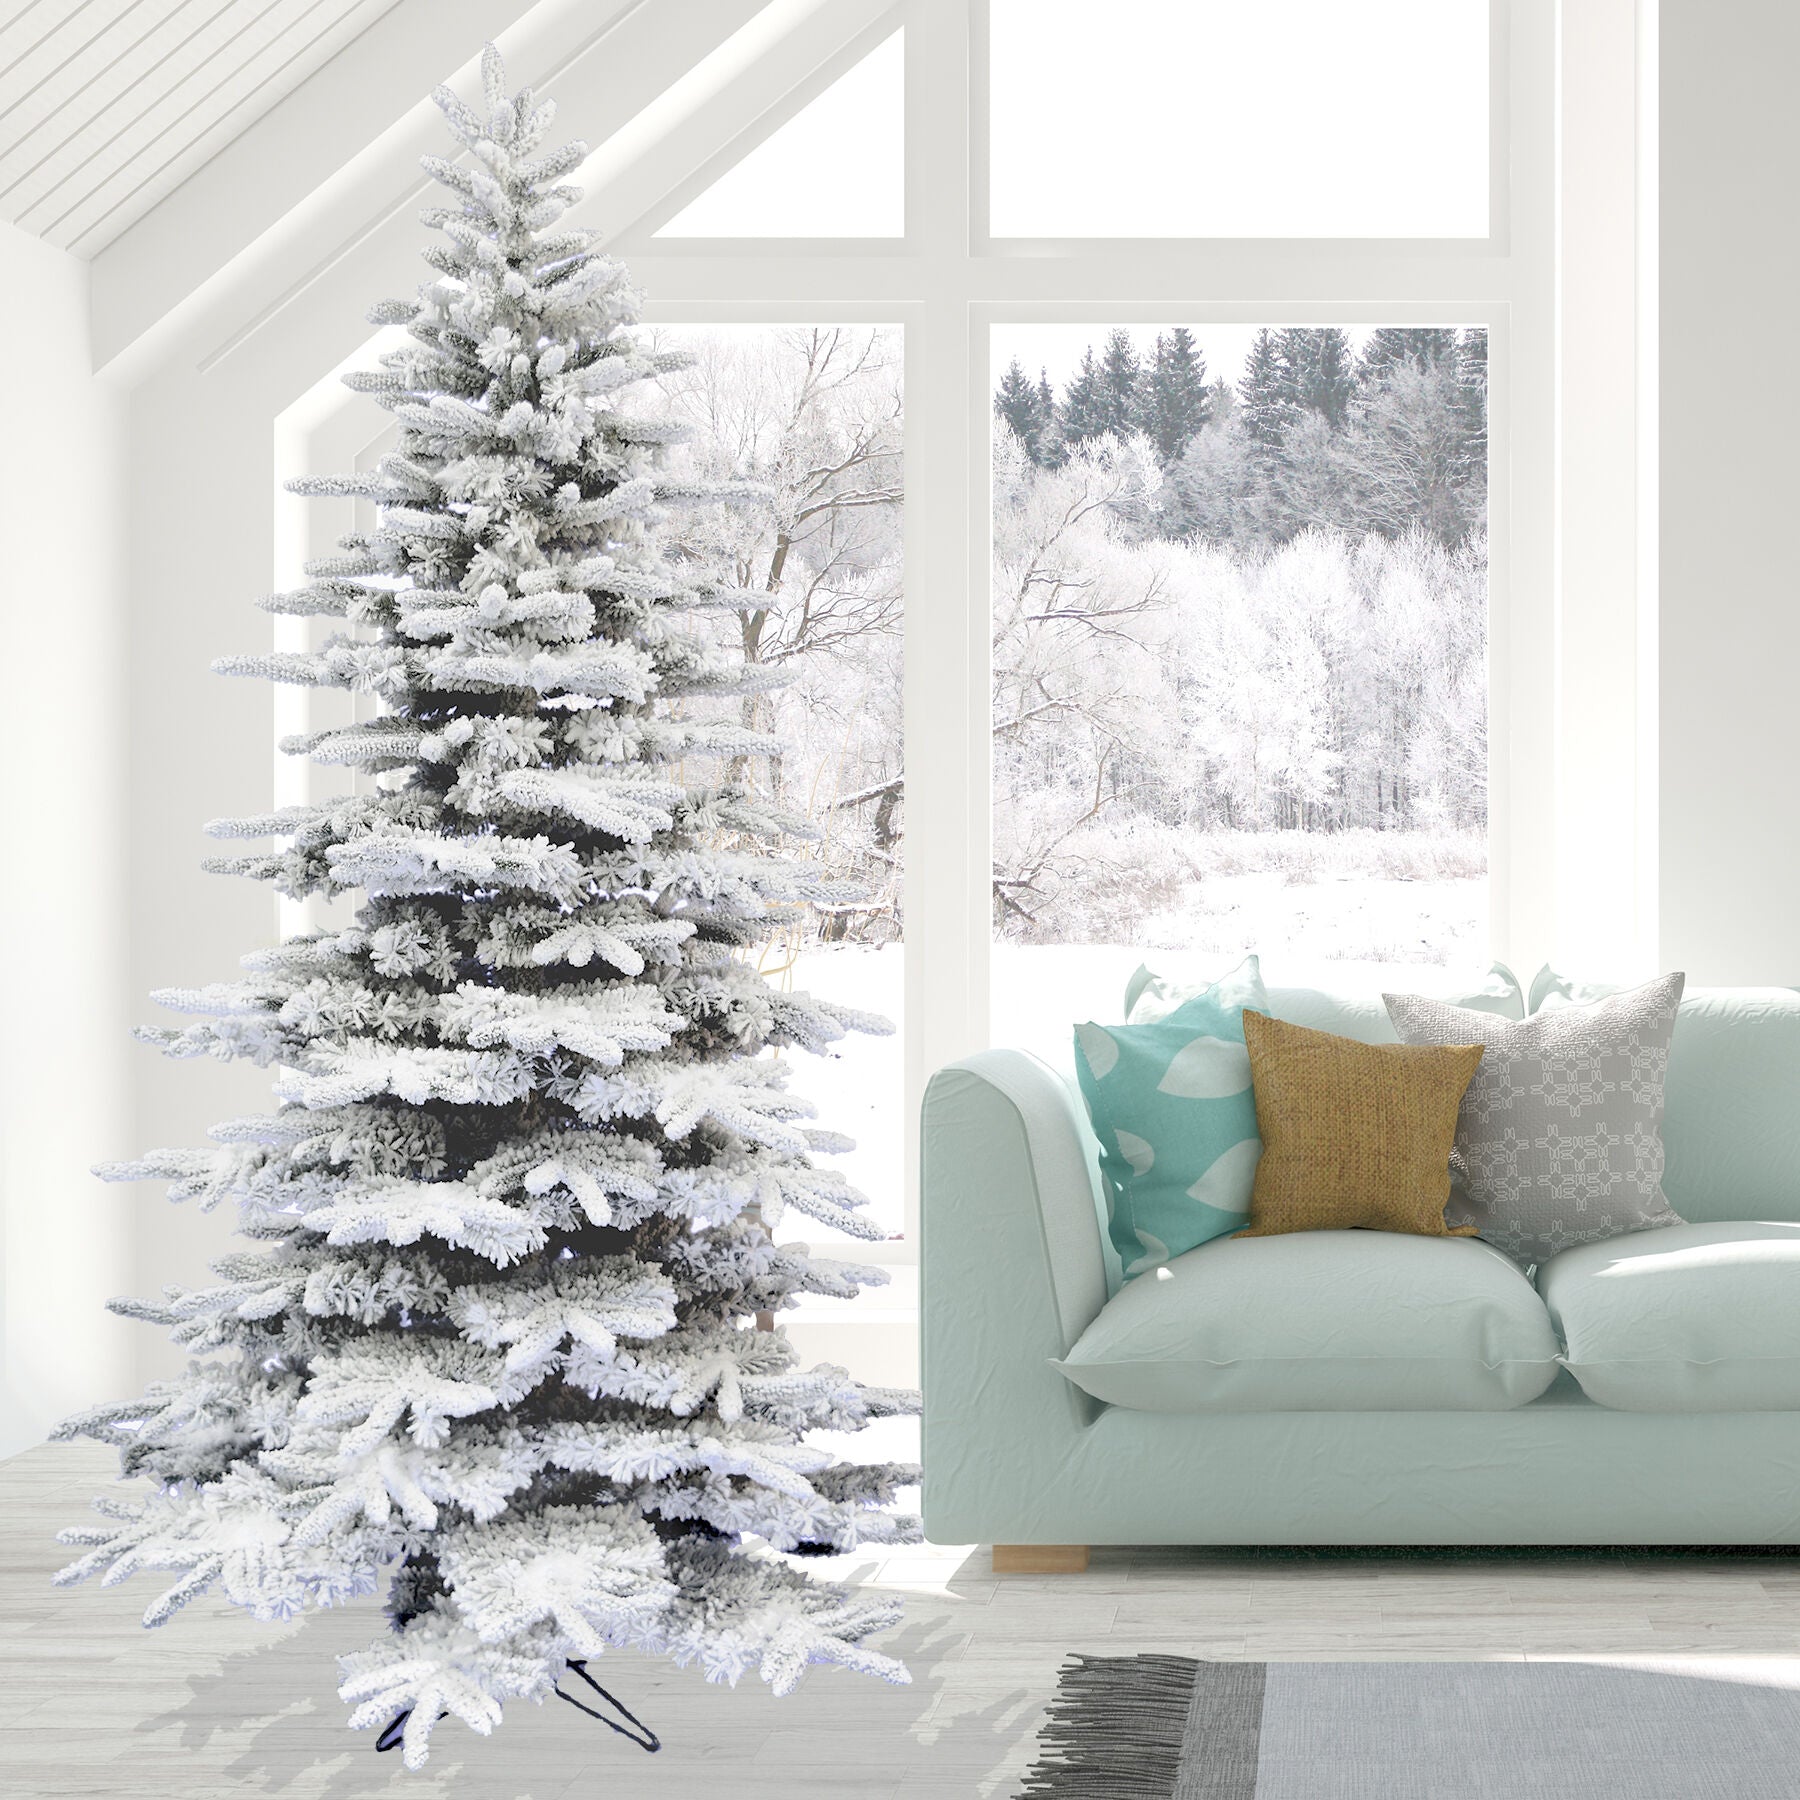 Fraser Hill Farm -  6.5-Ft. Flocked Mountain Pine Christmas Tree with Warm White LED String Lighting